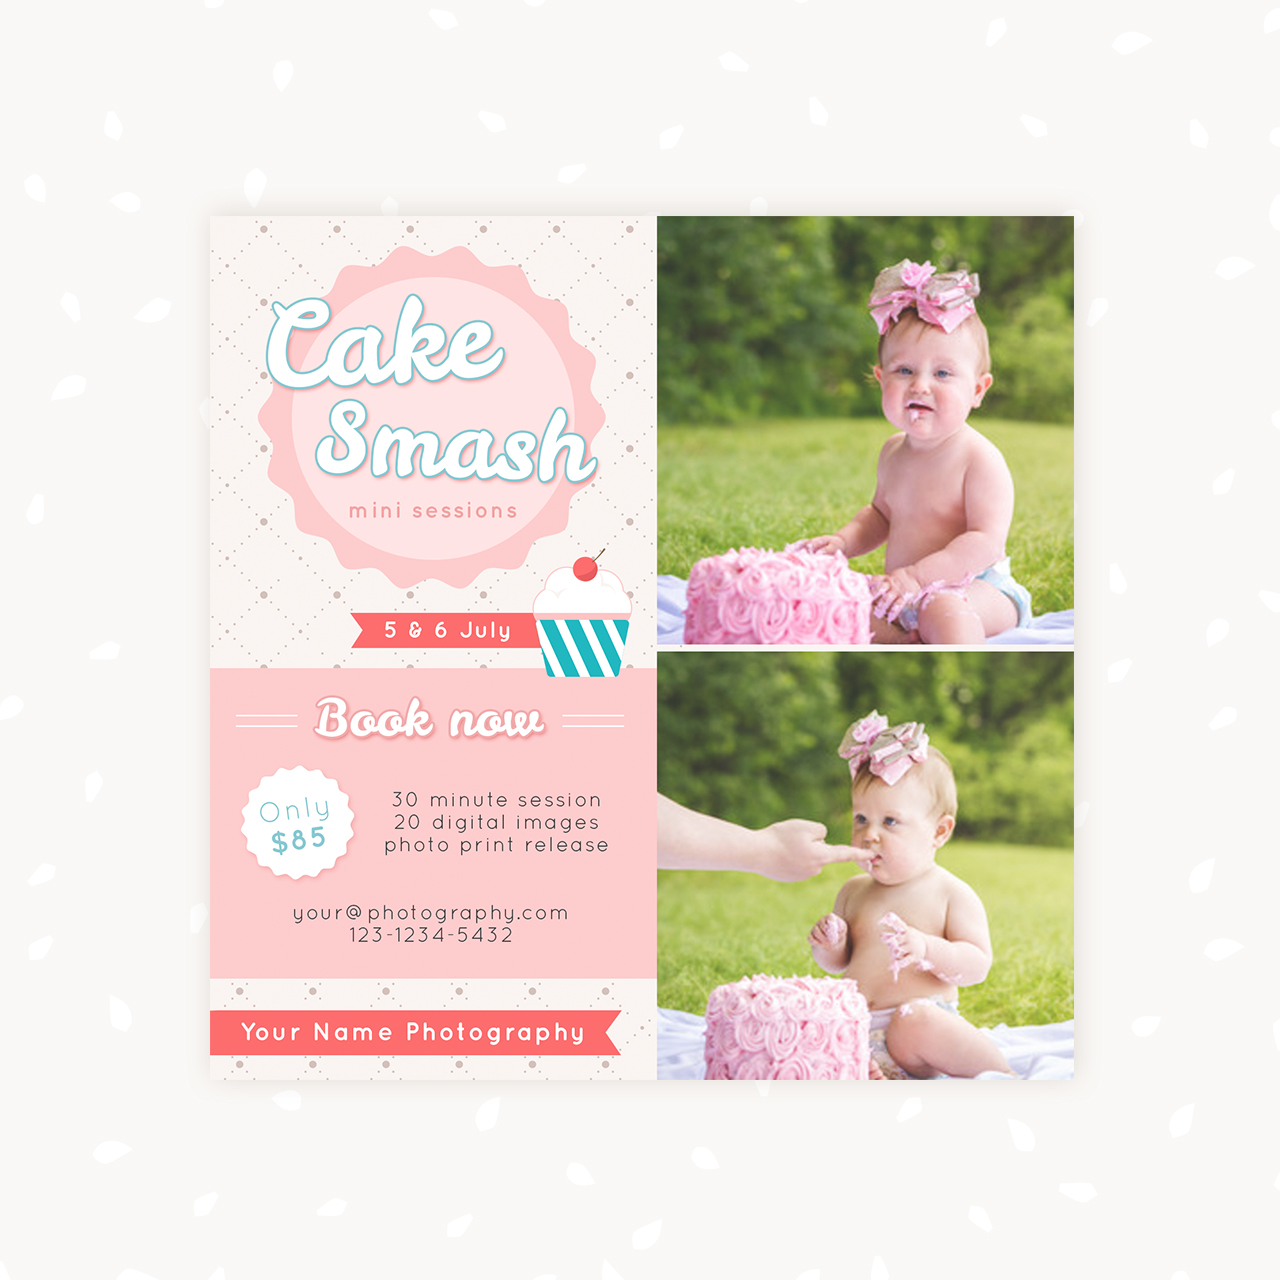 Cake Smash Photo Sessions Marketing Board